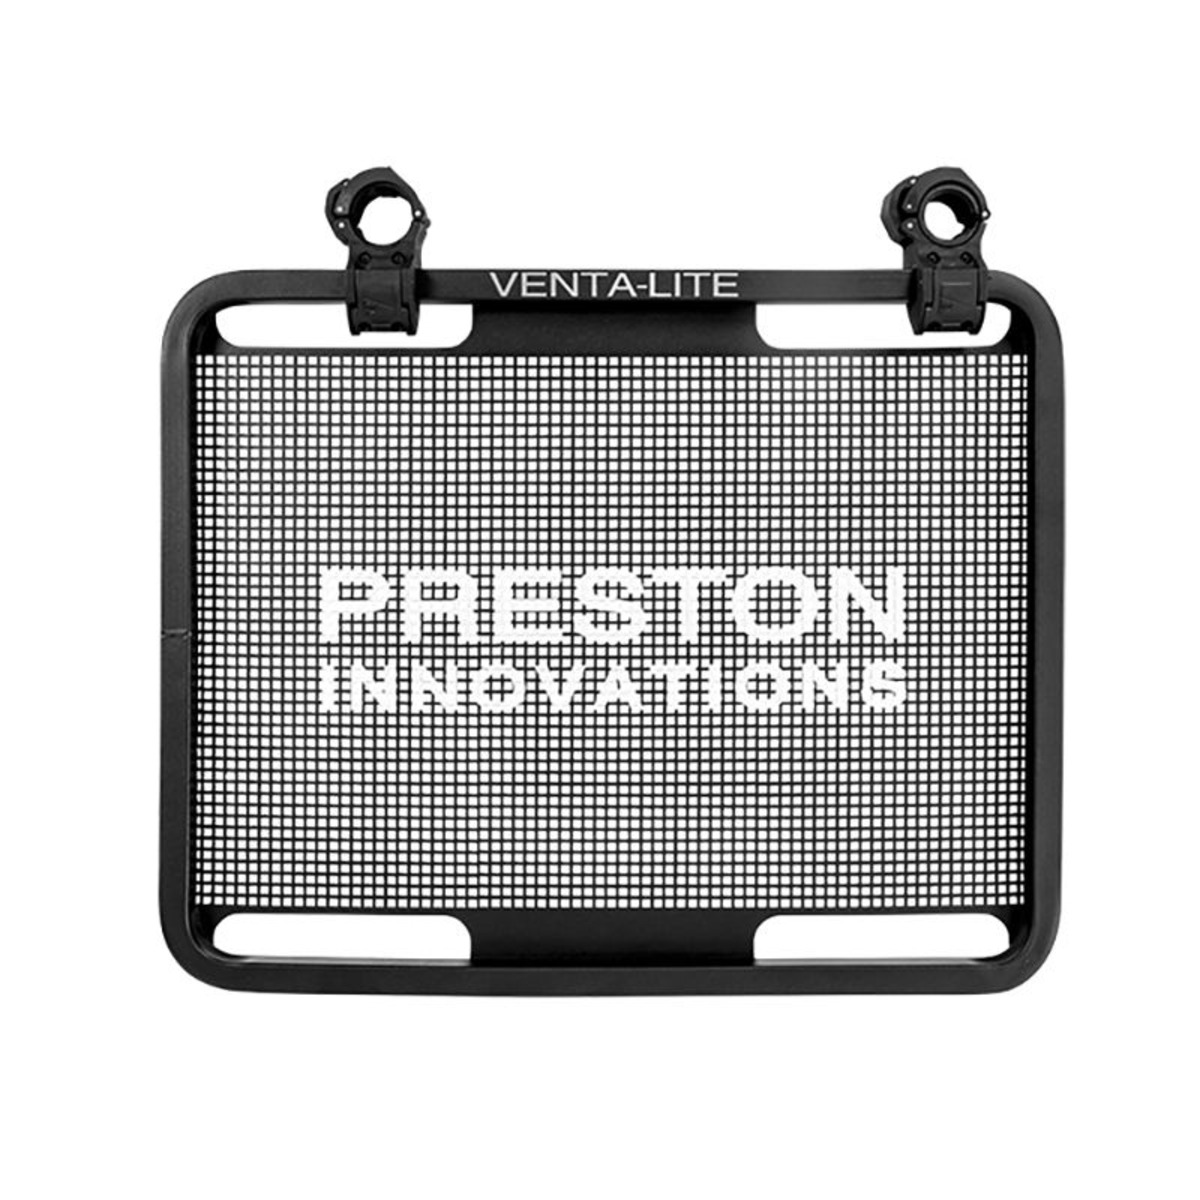 Preston Venta LiteSide Tray - Large